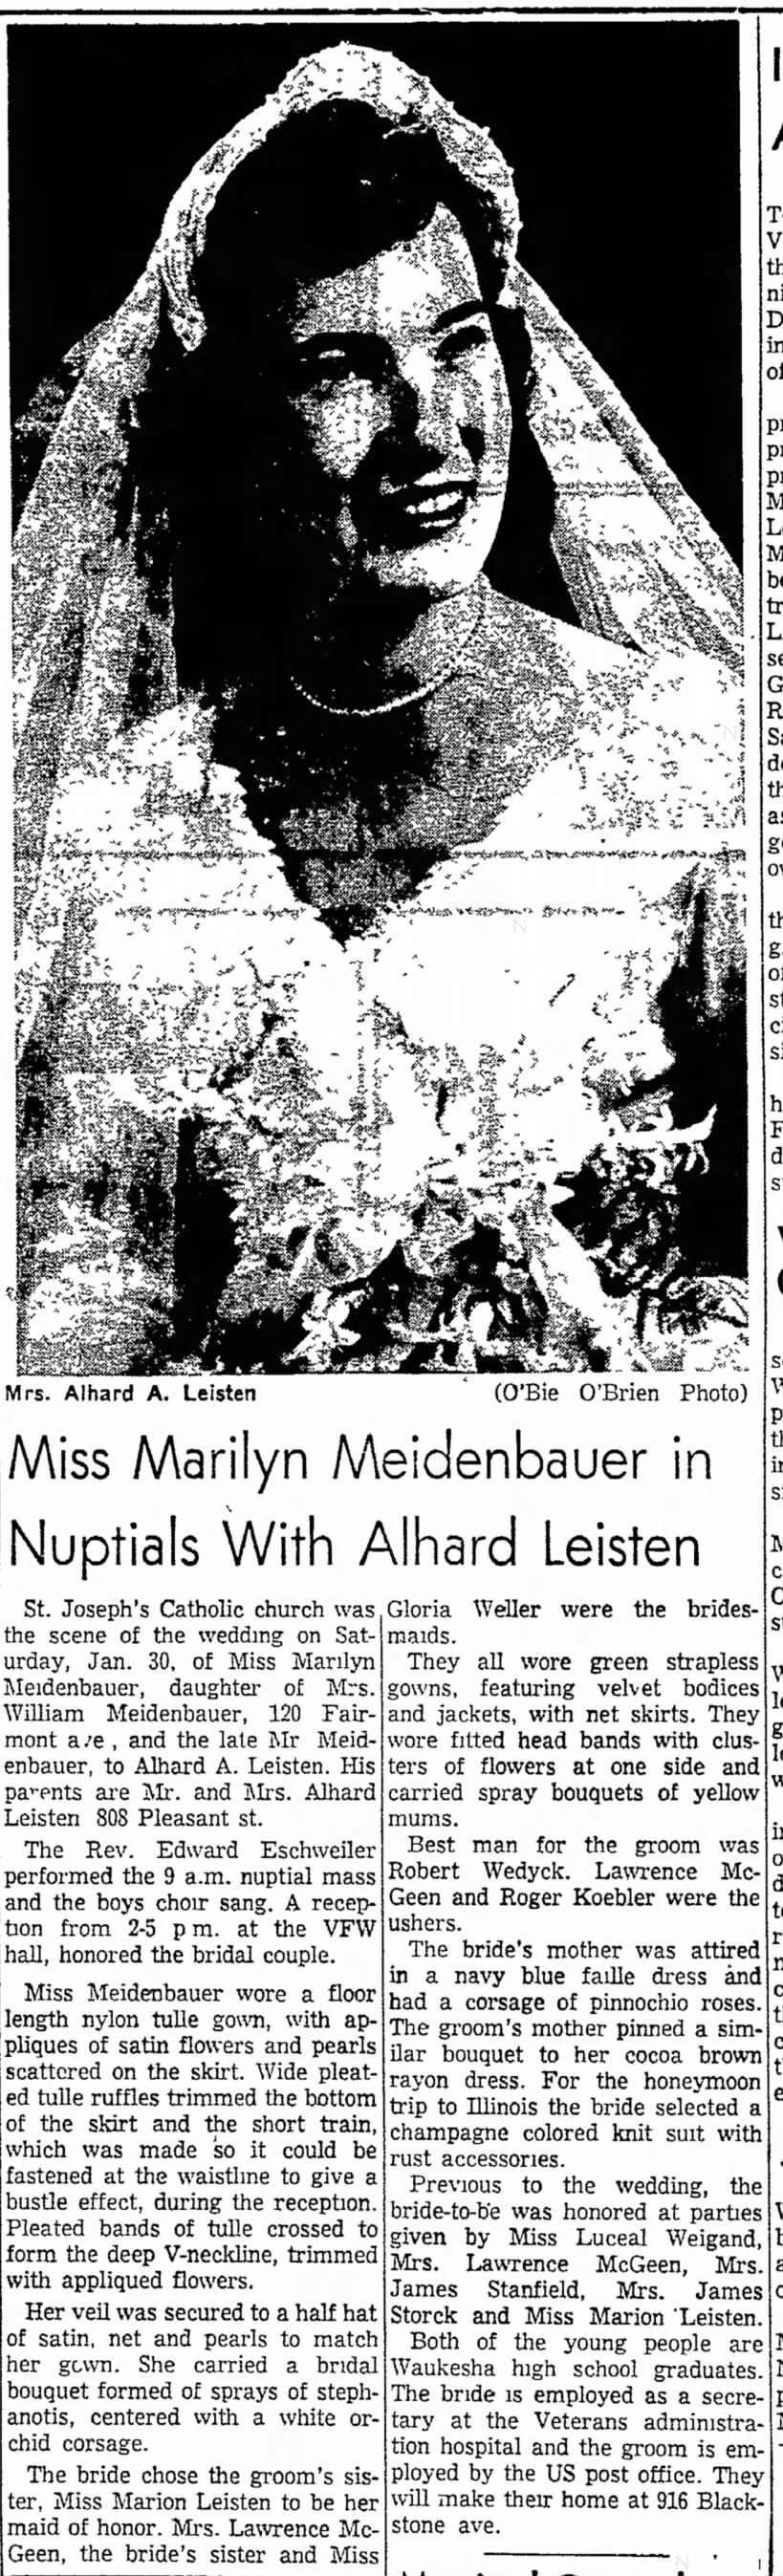 Marylyn Meidenbauer marries Alhard A. Leisten